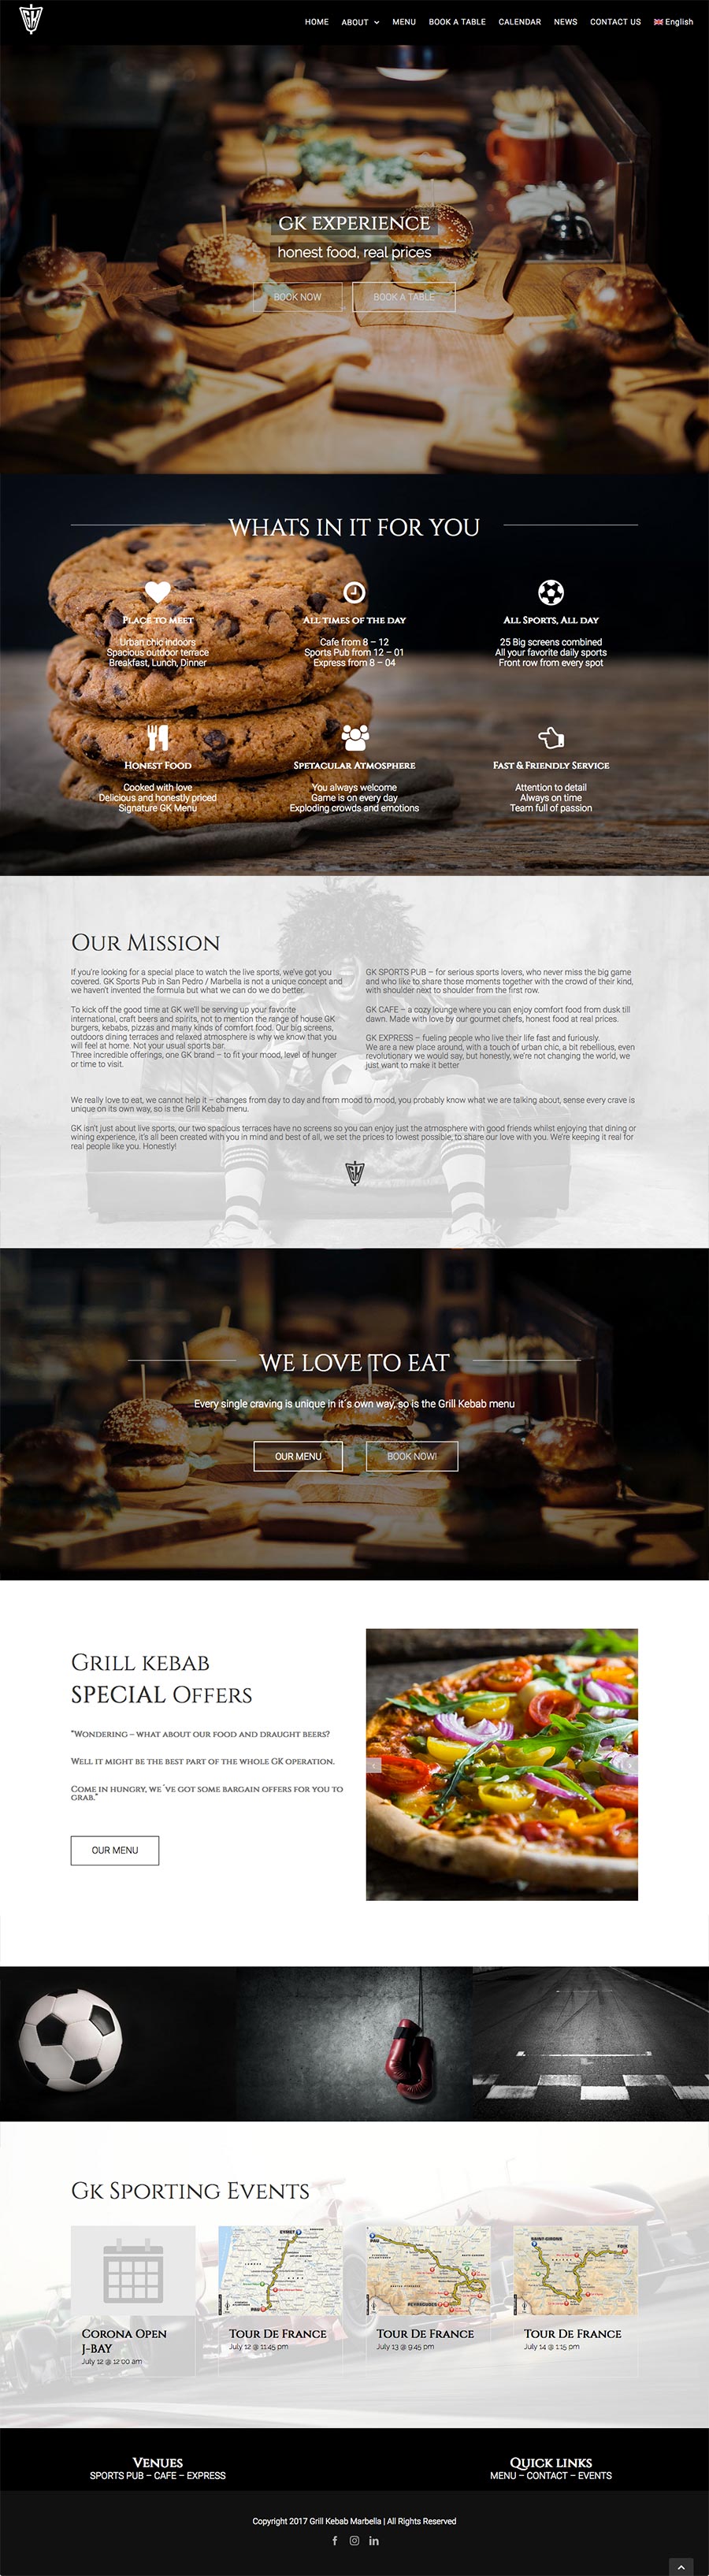 Restaurant website design web-site-design-gk-sports-pub-marbella